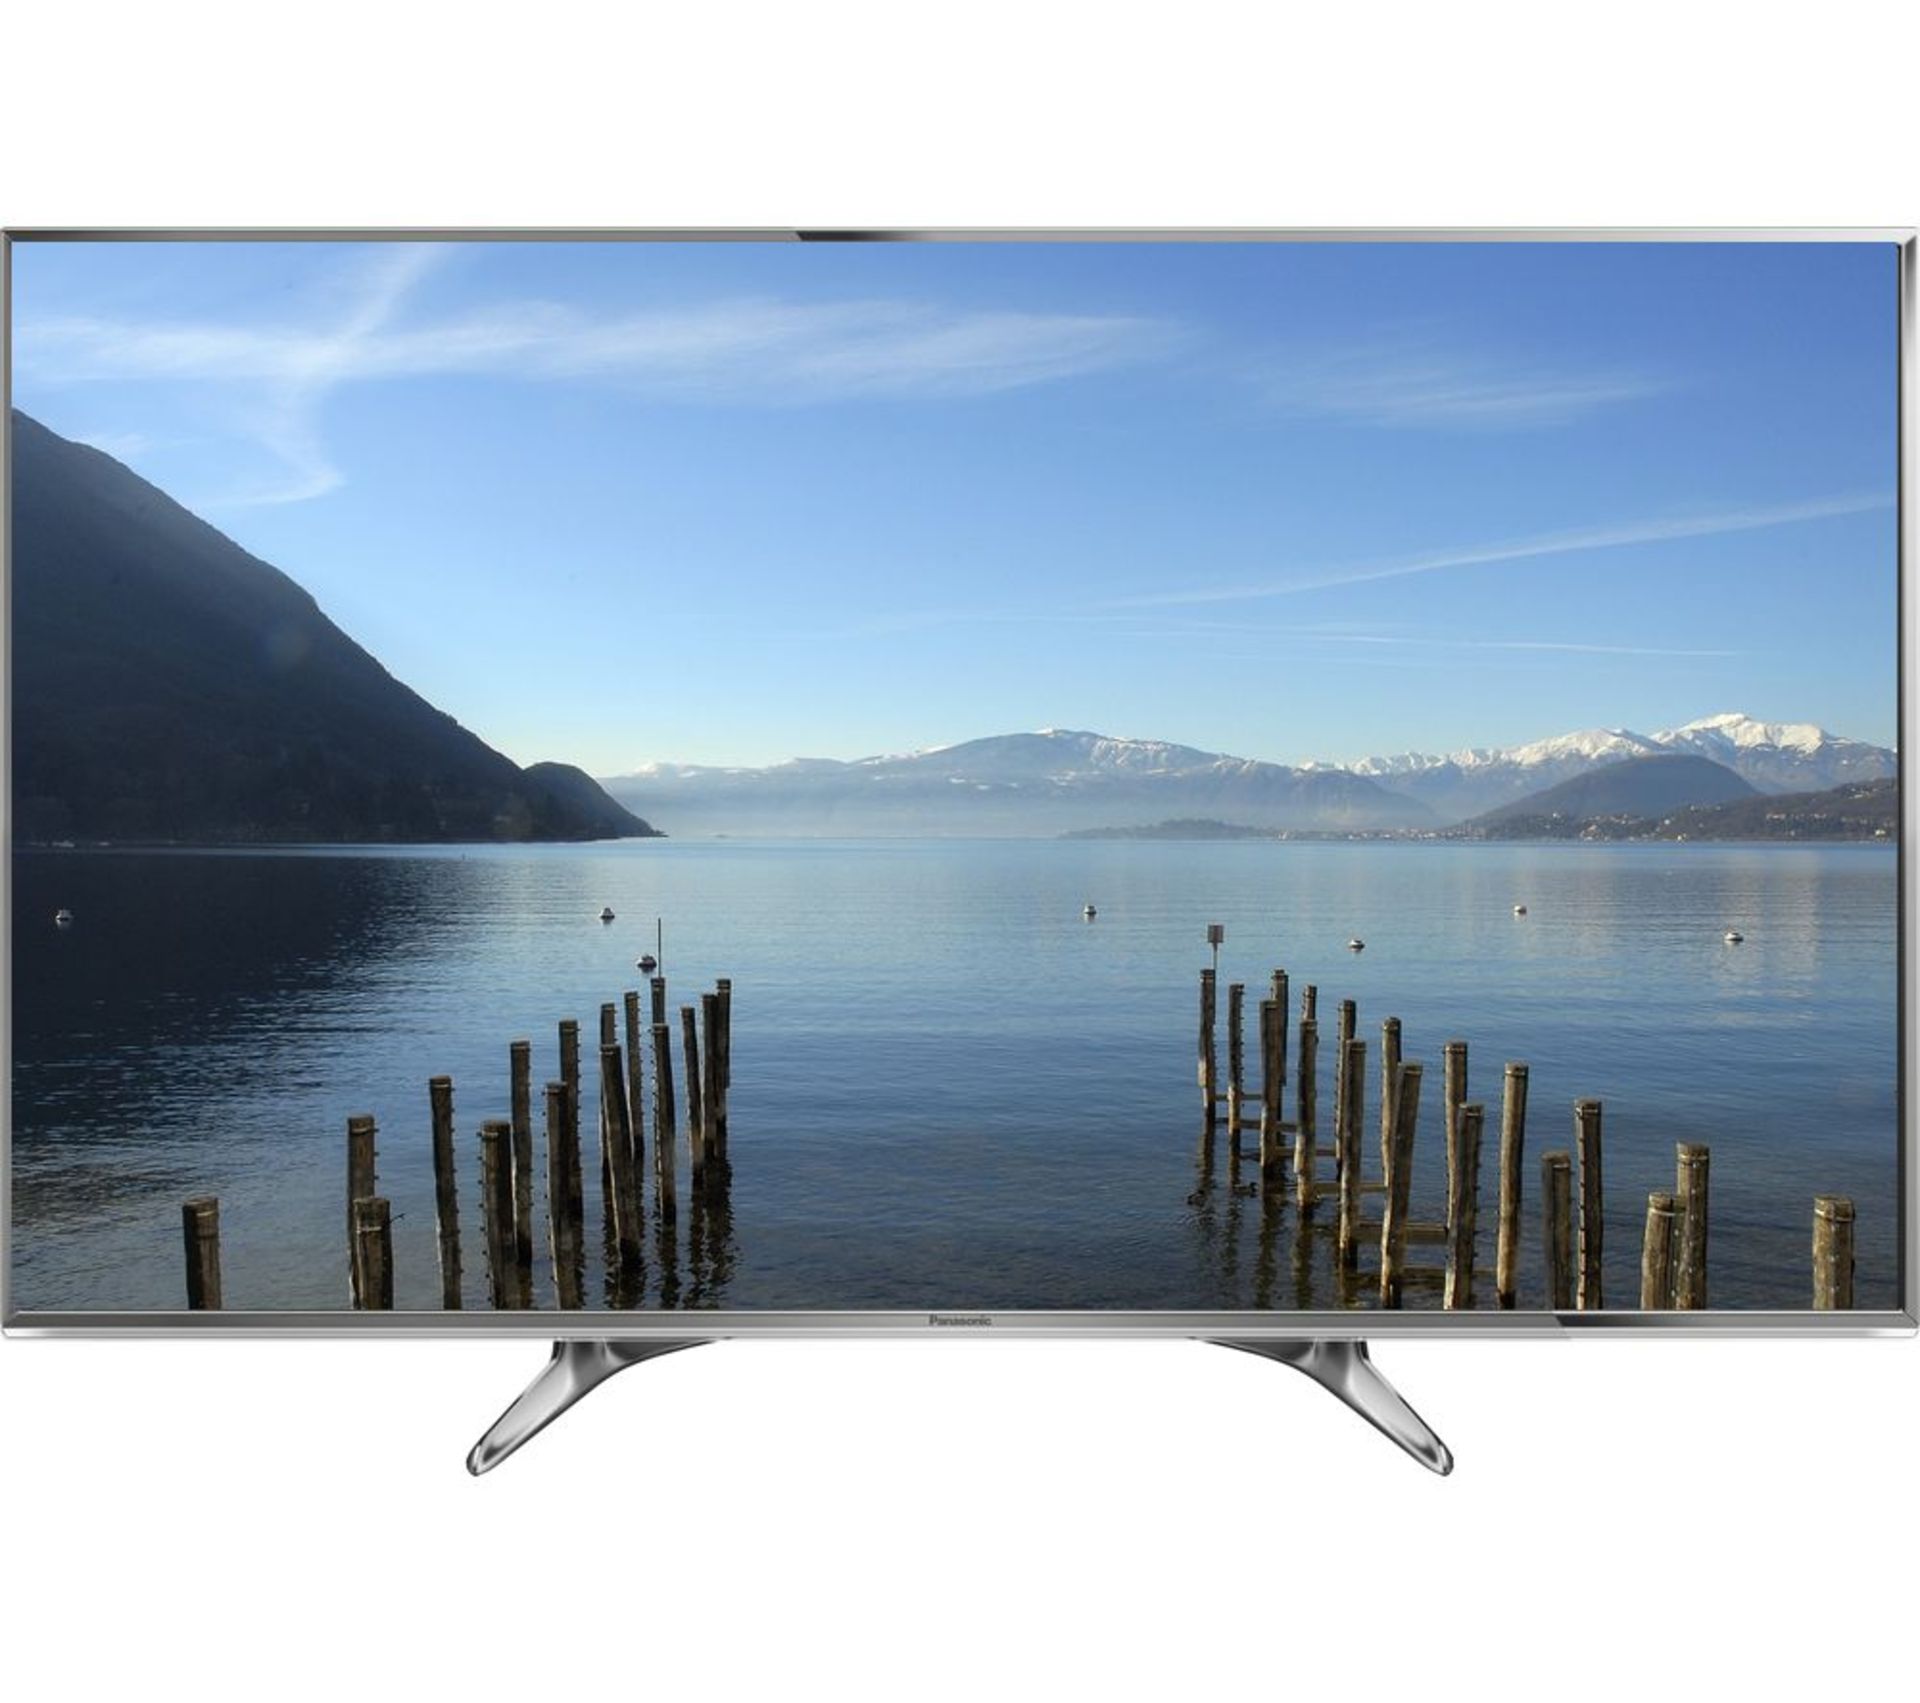 (T4) PANASONIC VIERA TX-55DX650B Smart 4k Ultra HD 55" LED TV. RRP £799. Experience beautiful 4k - Bild 4 aus 4